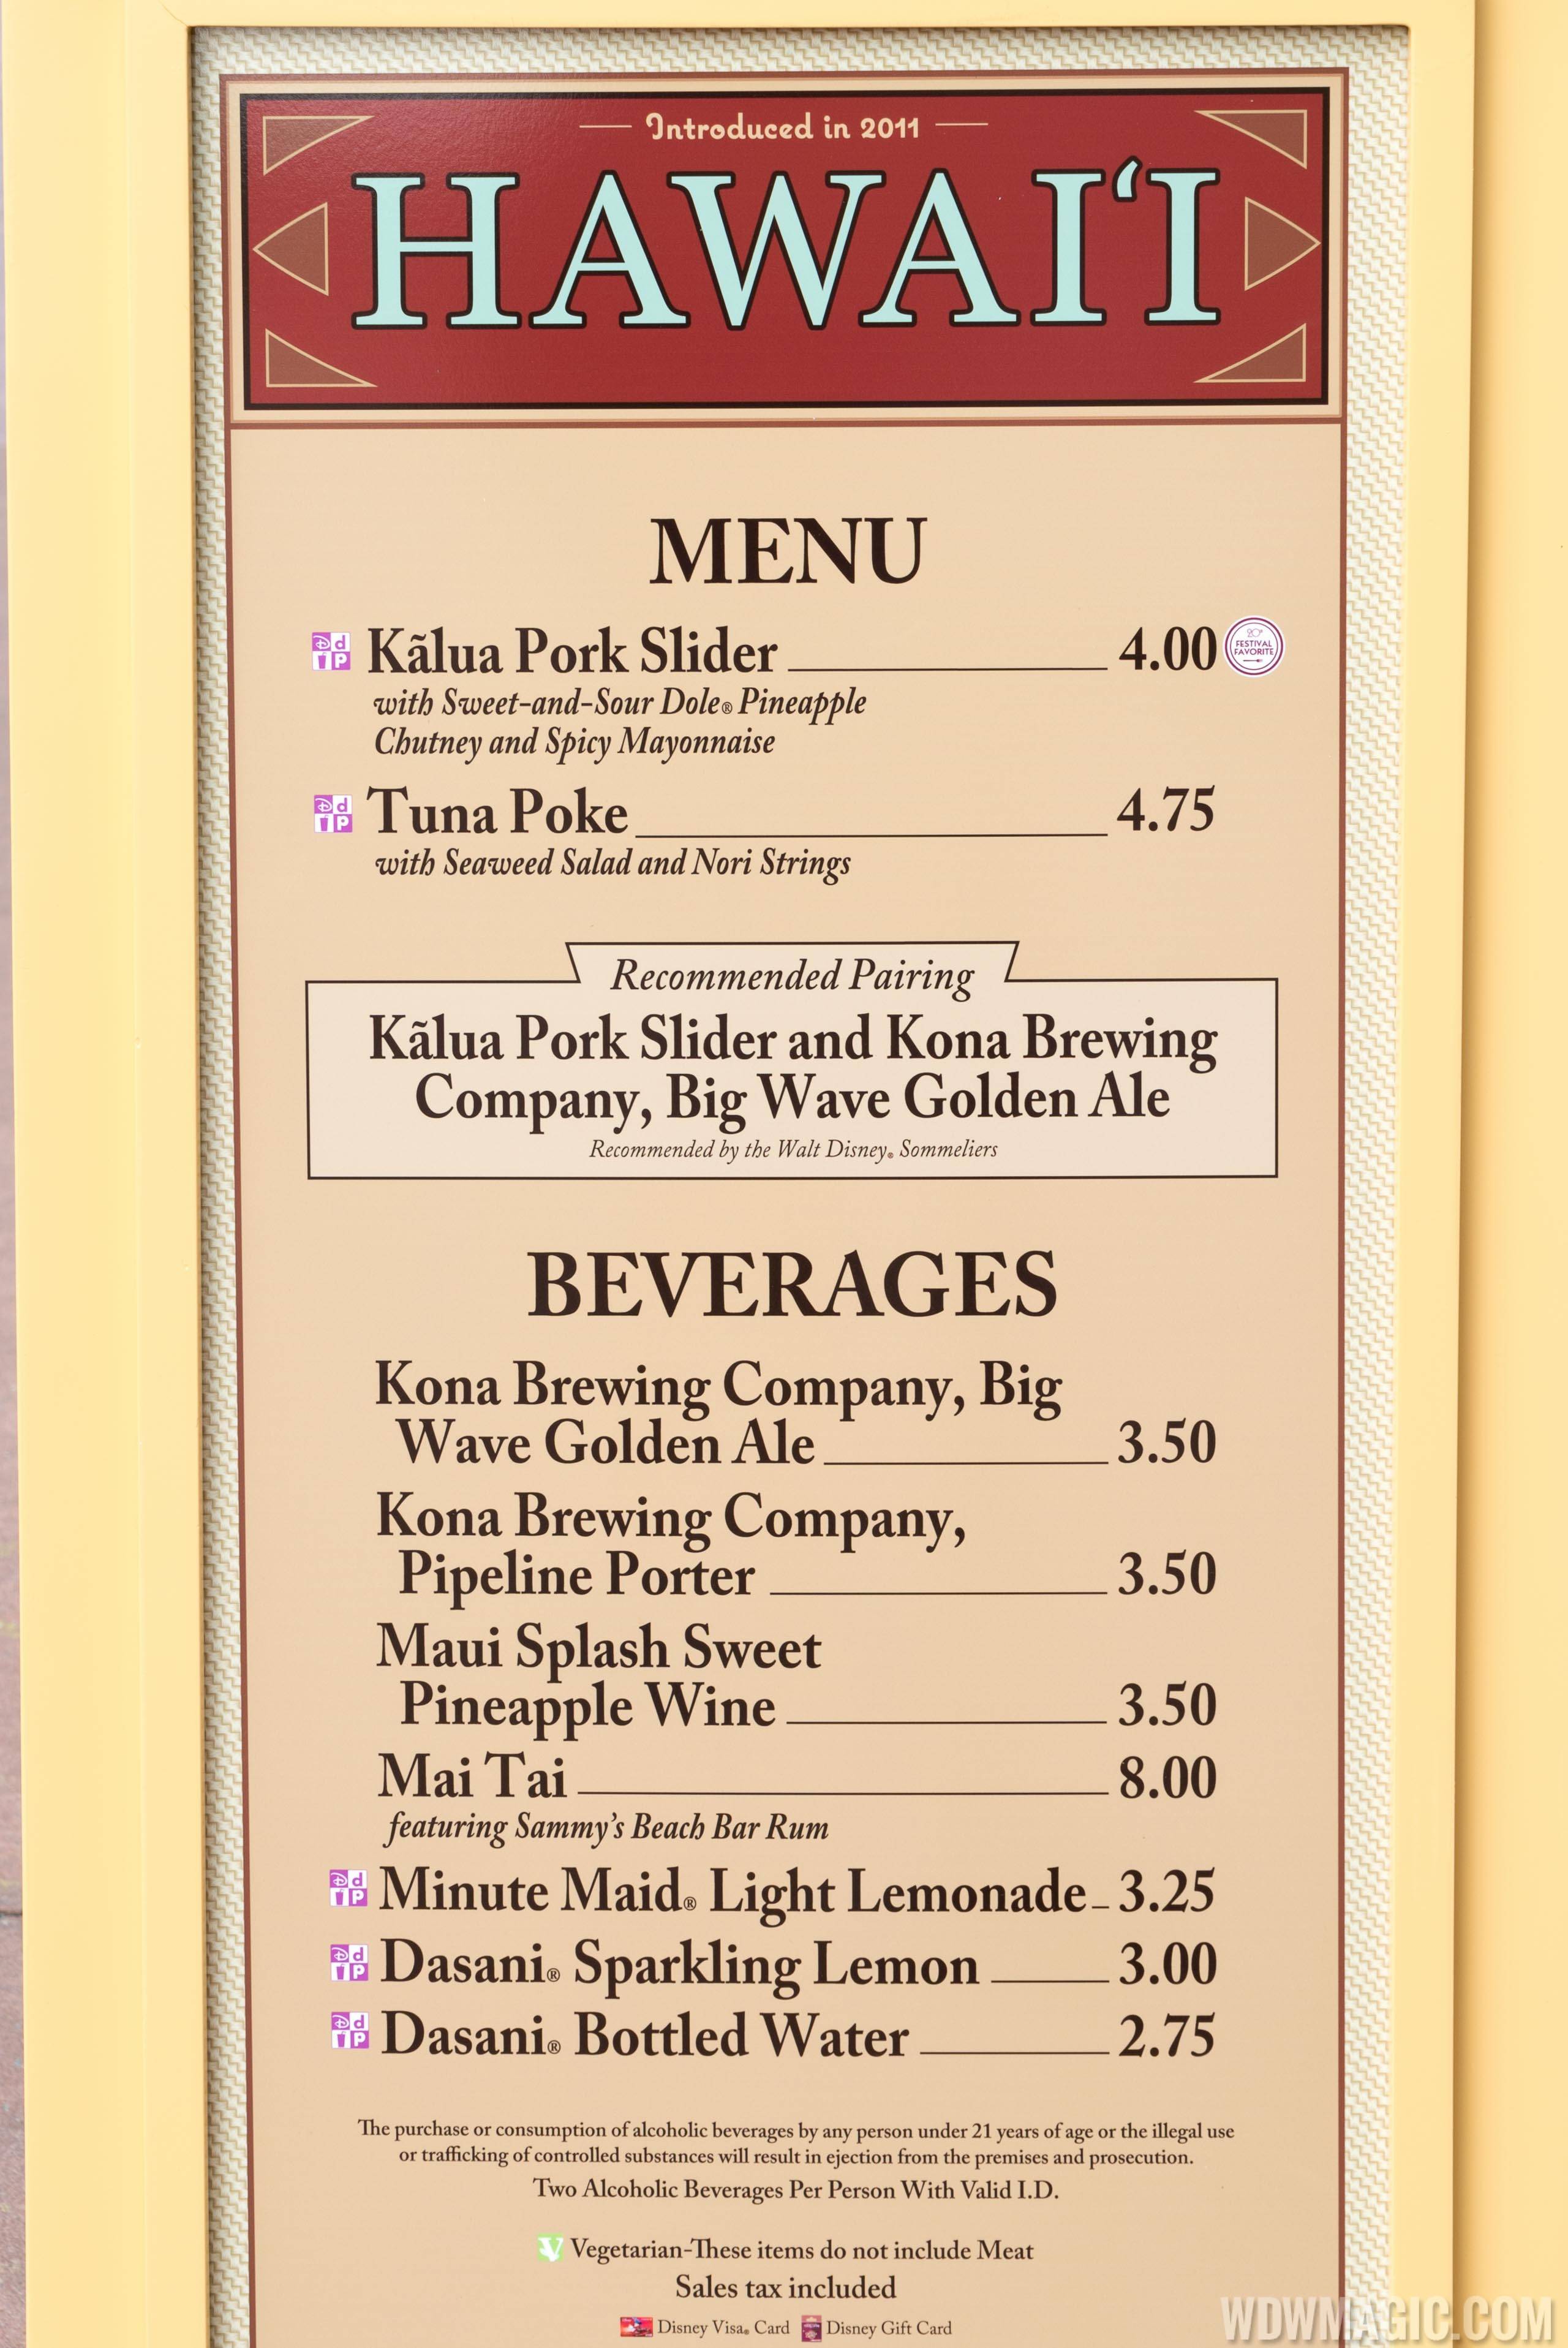 2015 Epcot Food and Wine Festival Marketplace kiosk - Hawai'i menu